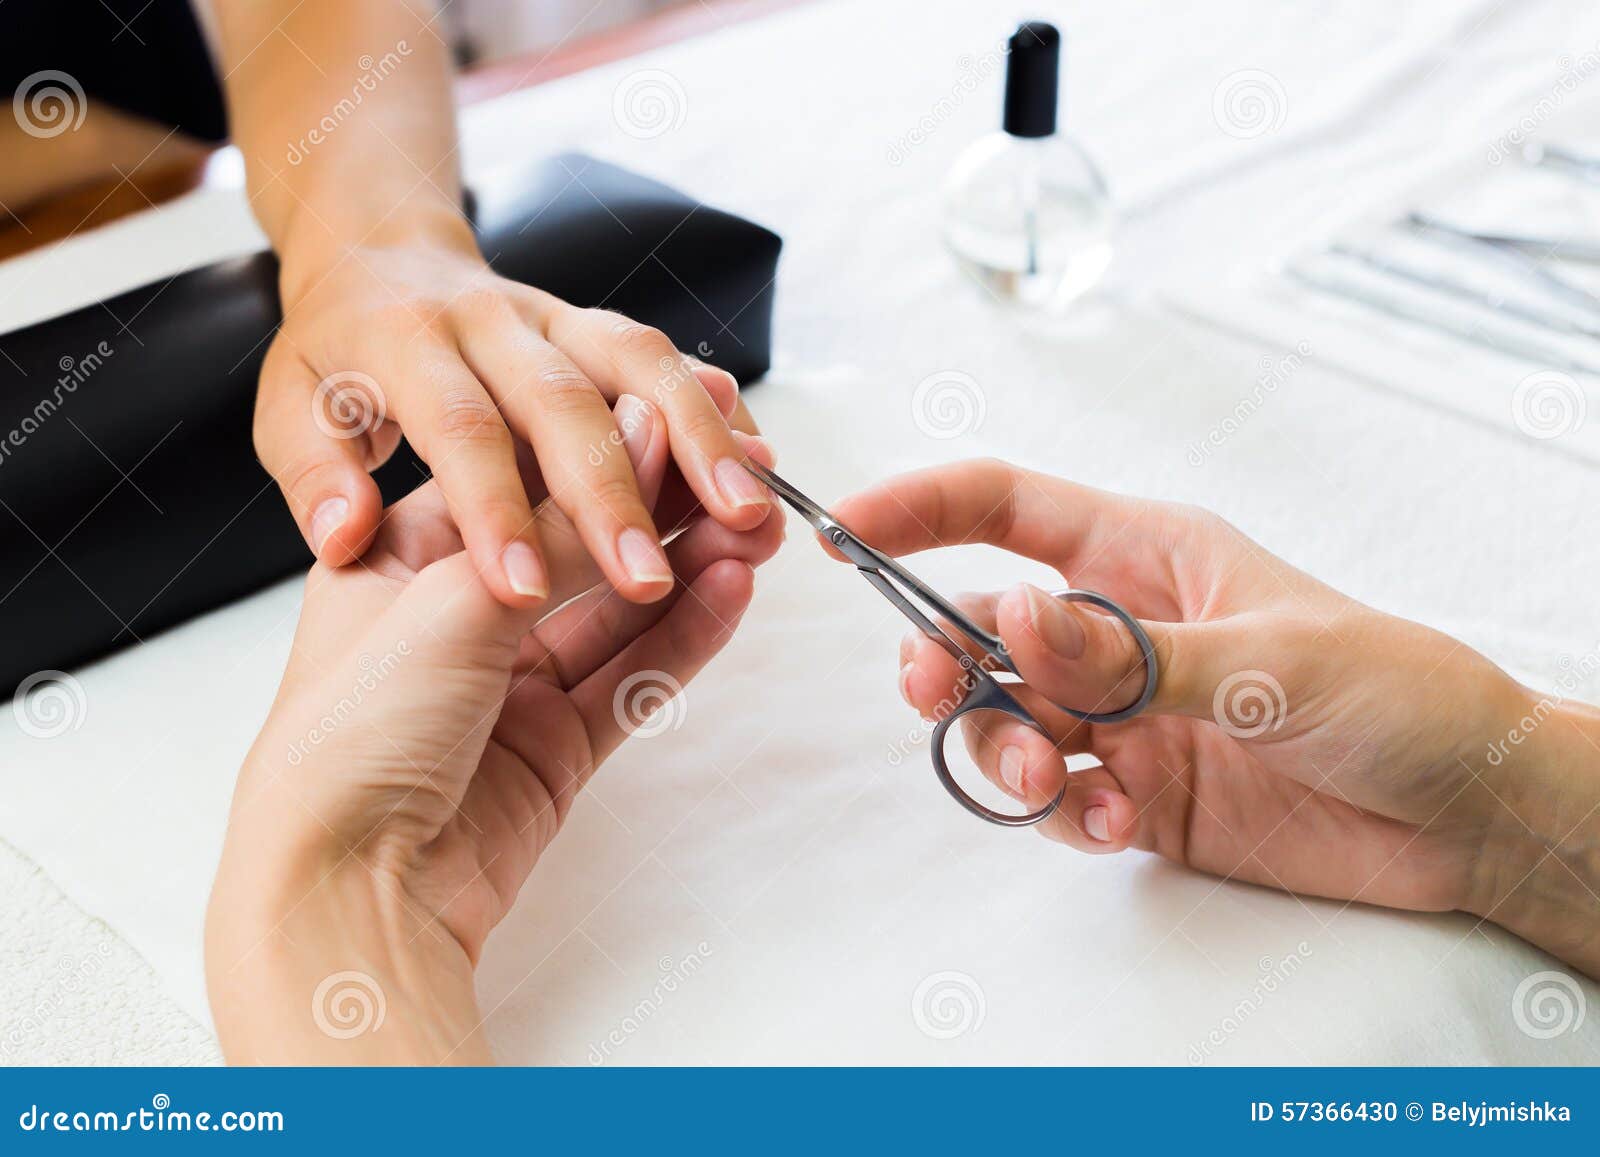 manicurist trimming a clients cuticles